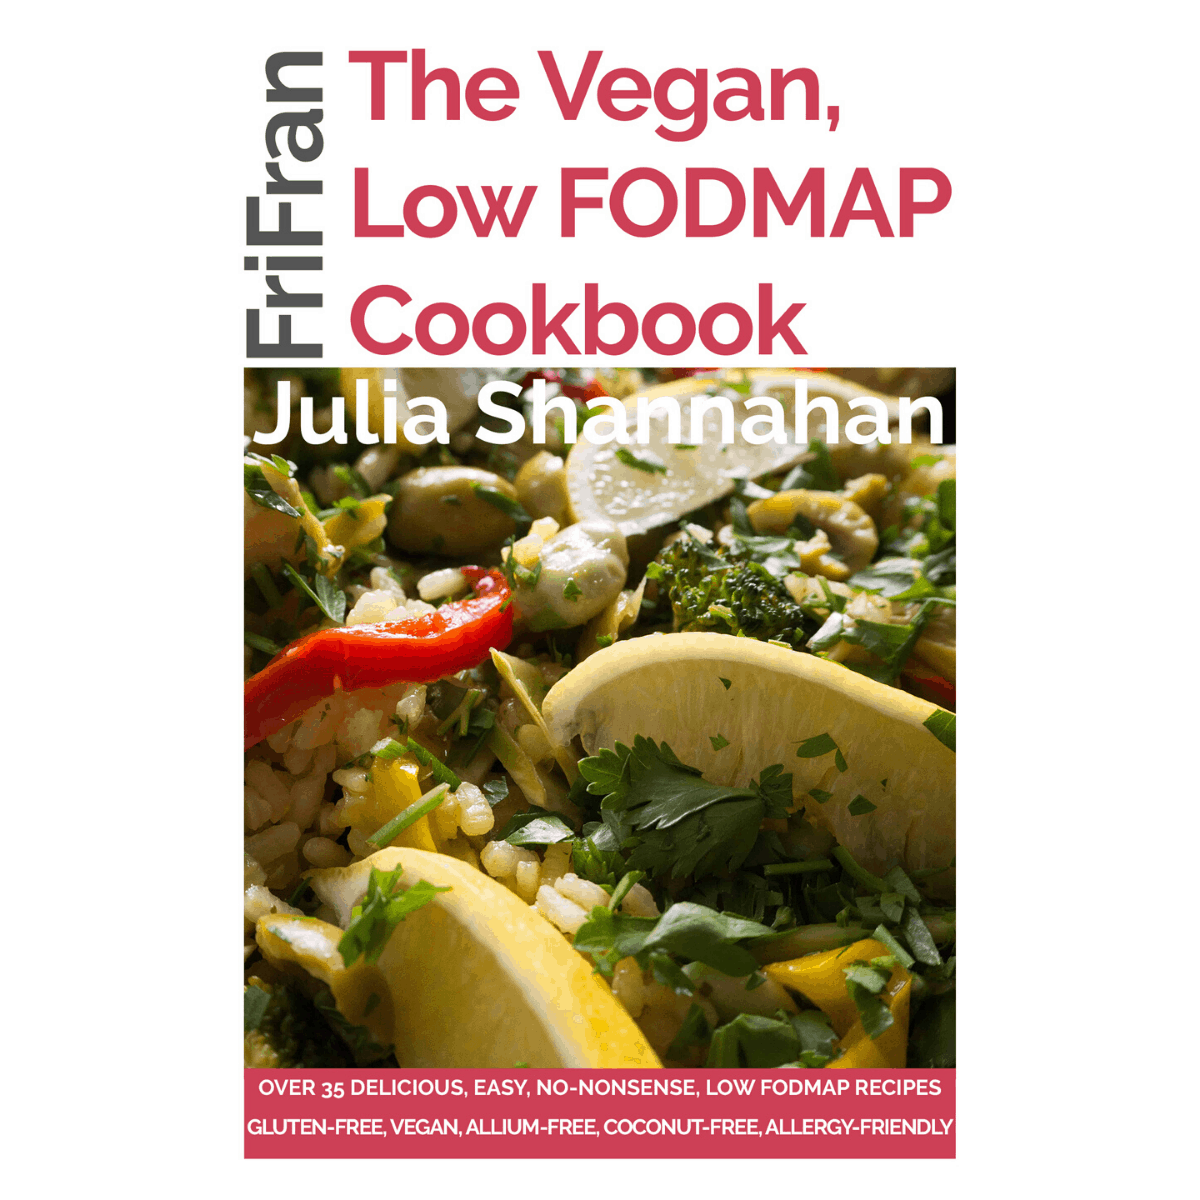 The Vegan, Low FODMAP Cookbook: No-nonsense Vegan, Low FODMAP, Gluten-Free Recipes. For Easy Low FODMAP Living